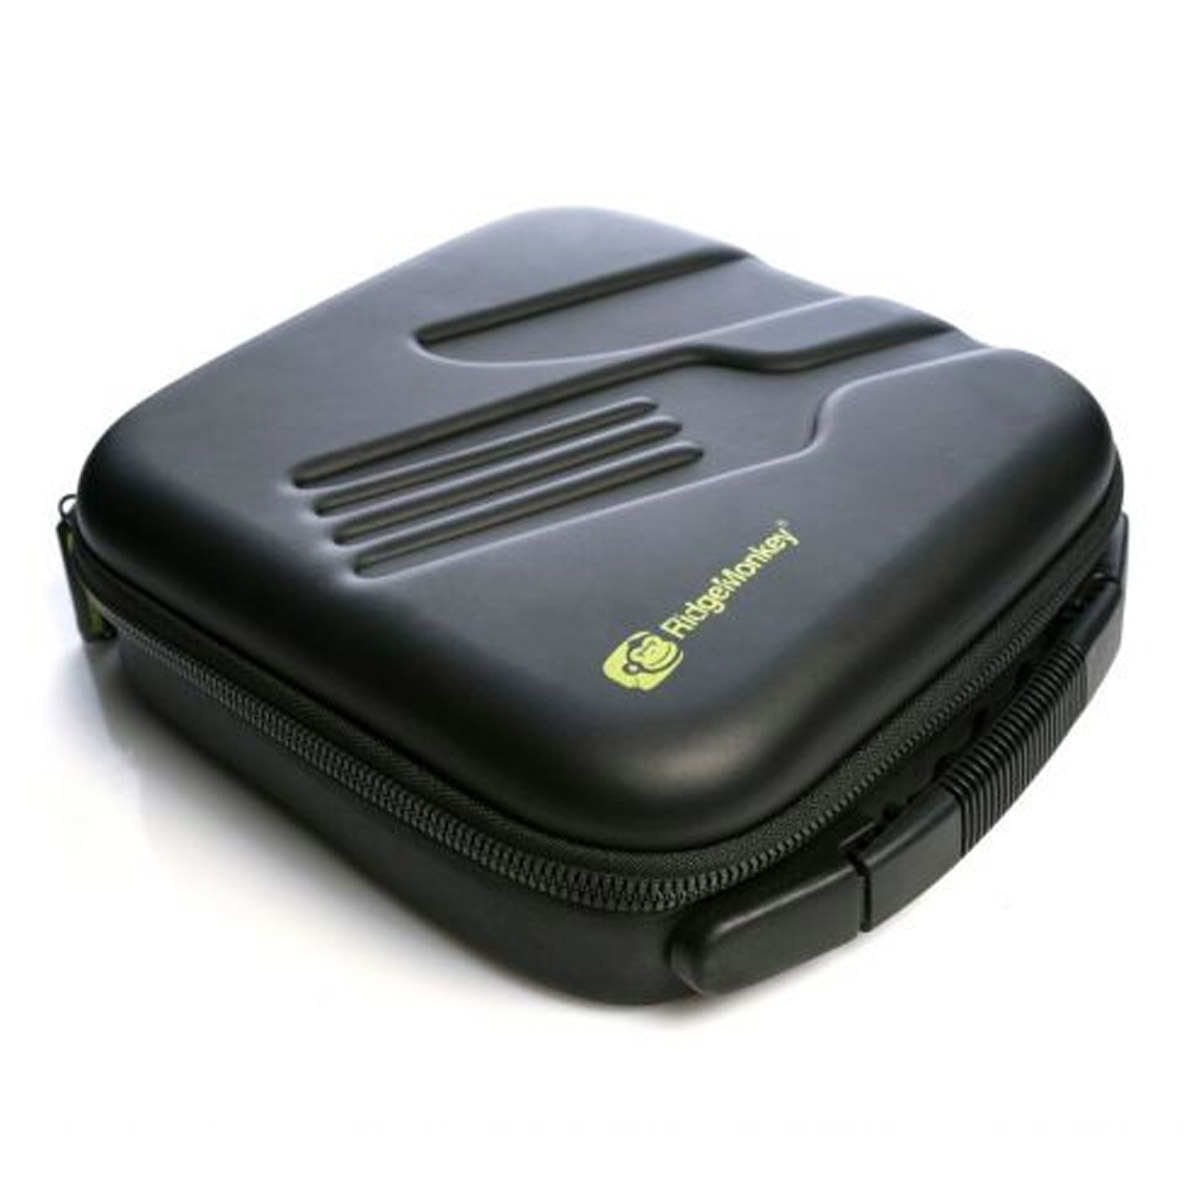 Ridgemonke gorillabox Toaster Case